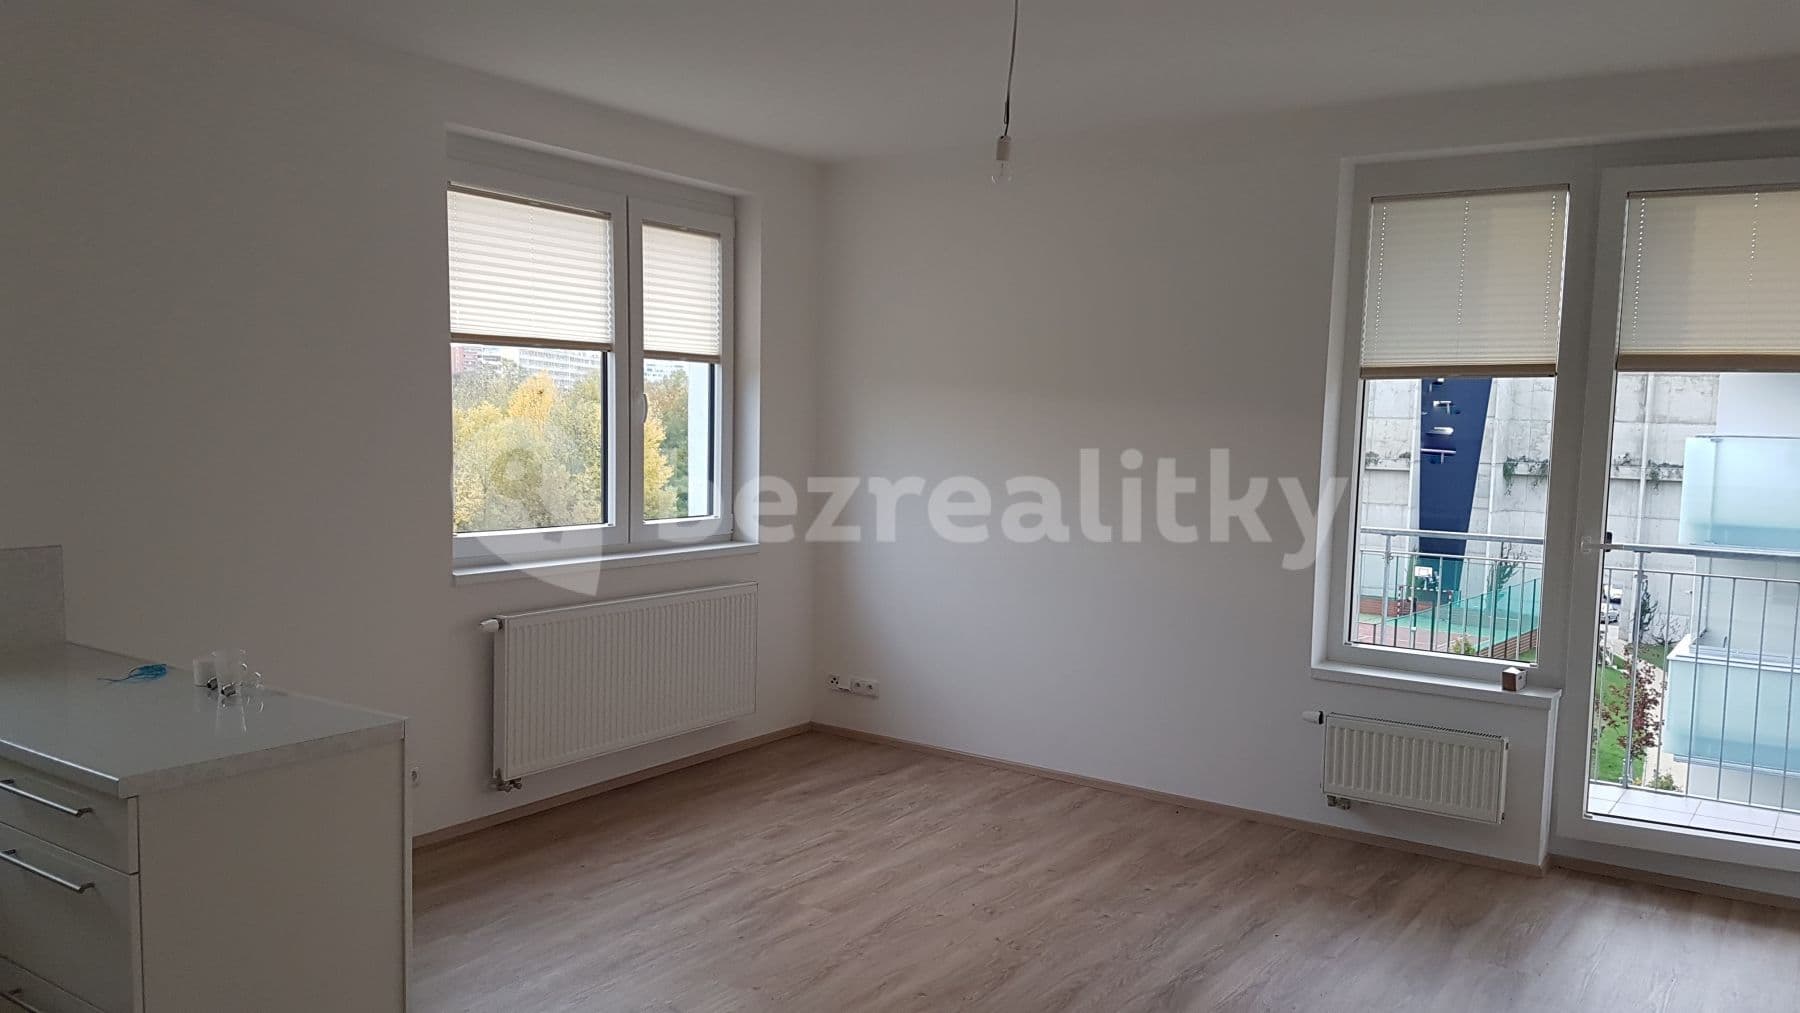 1 bedroom with open-plan kitchen flat to rent, 64 m², Makedonská, Prague, Prague